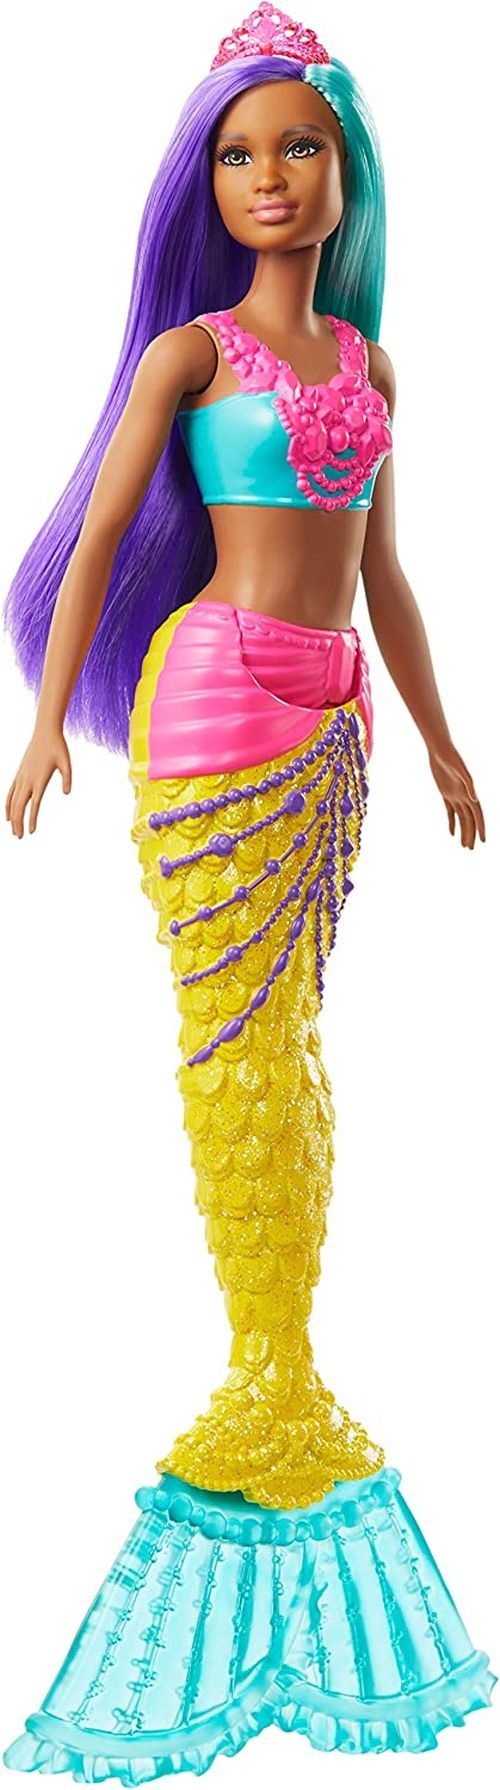 MATTEL Dreamtopia Black Mermaid Barbie Doll - BARBIE DOLLS